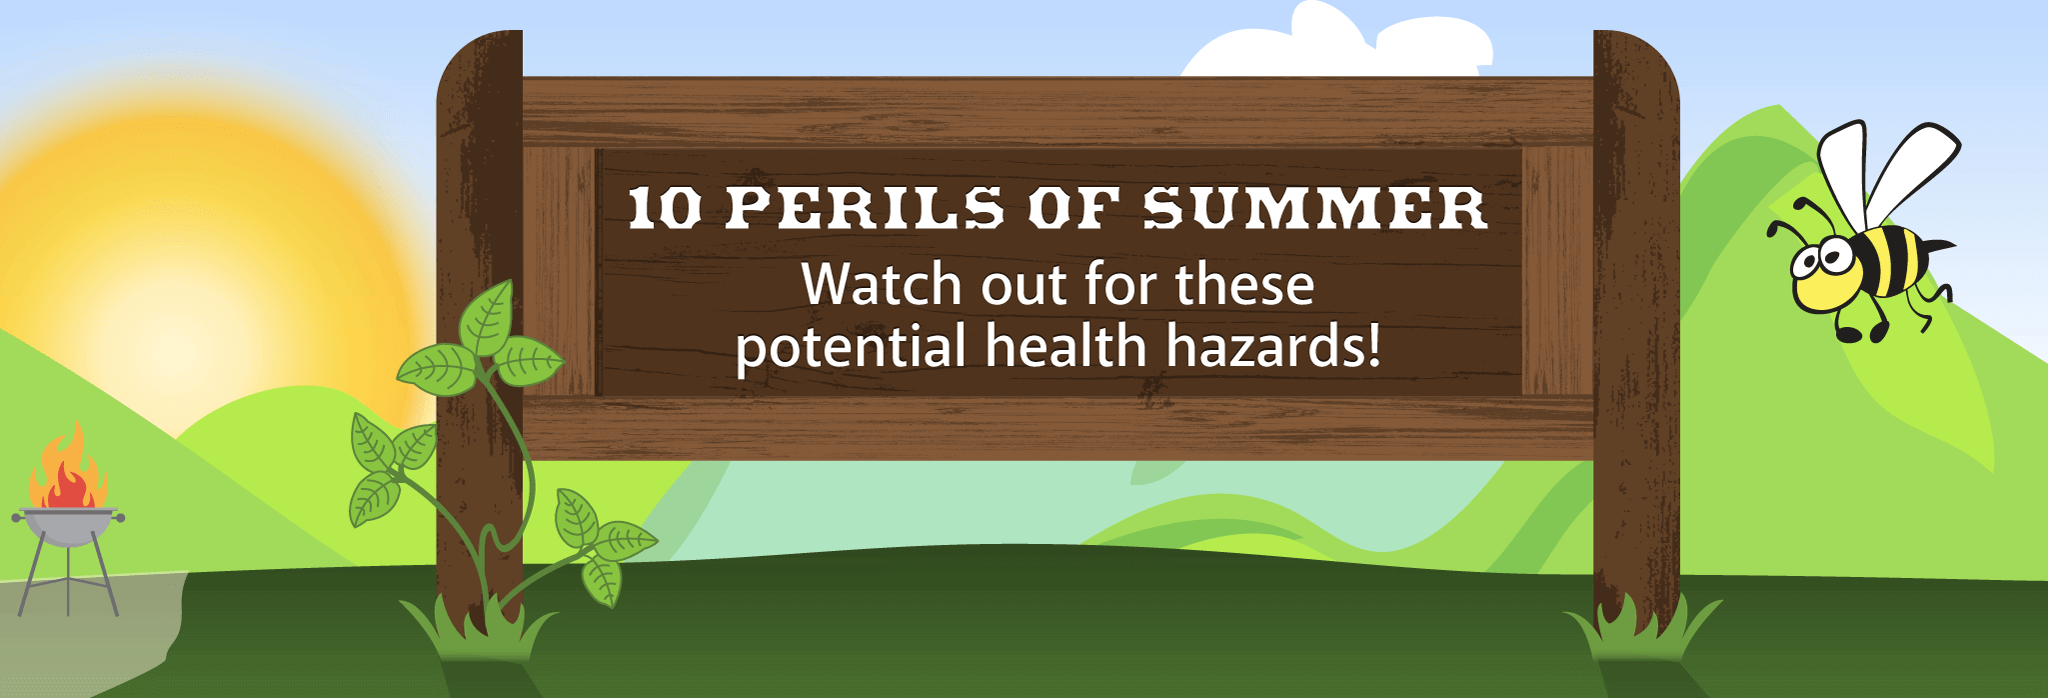 perils-of-summer-top-banner